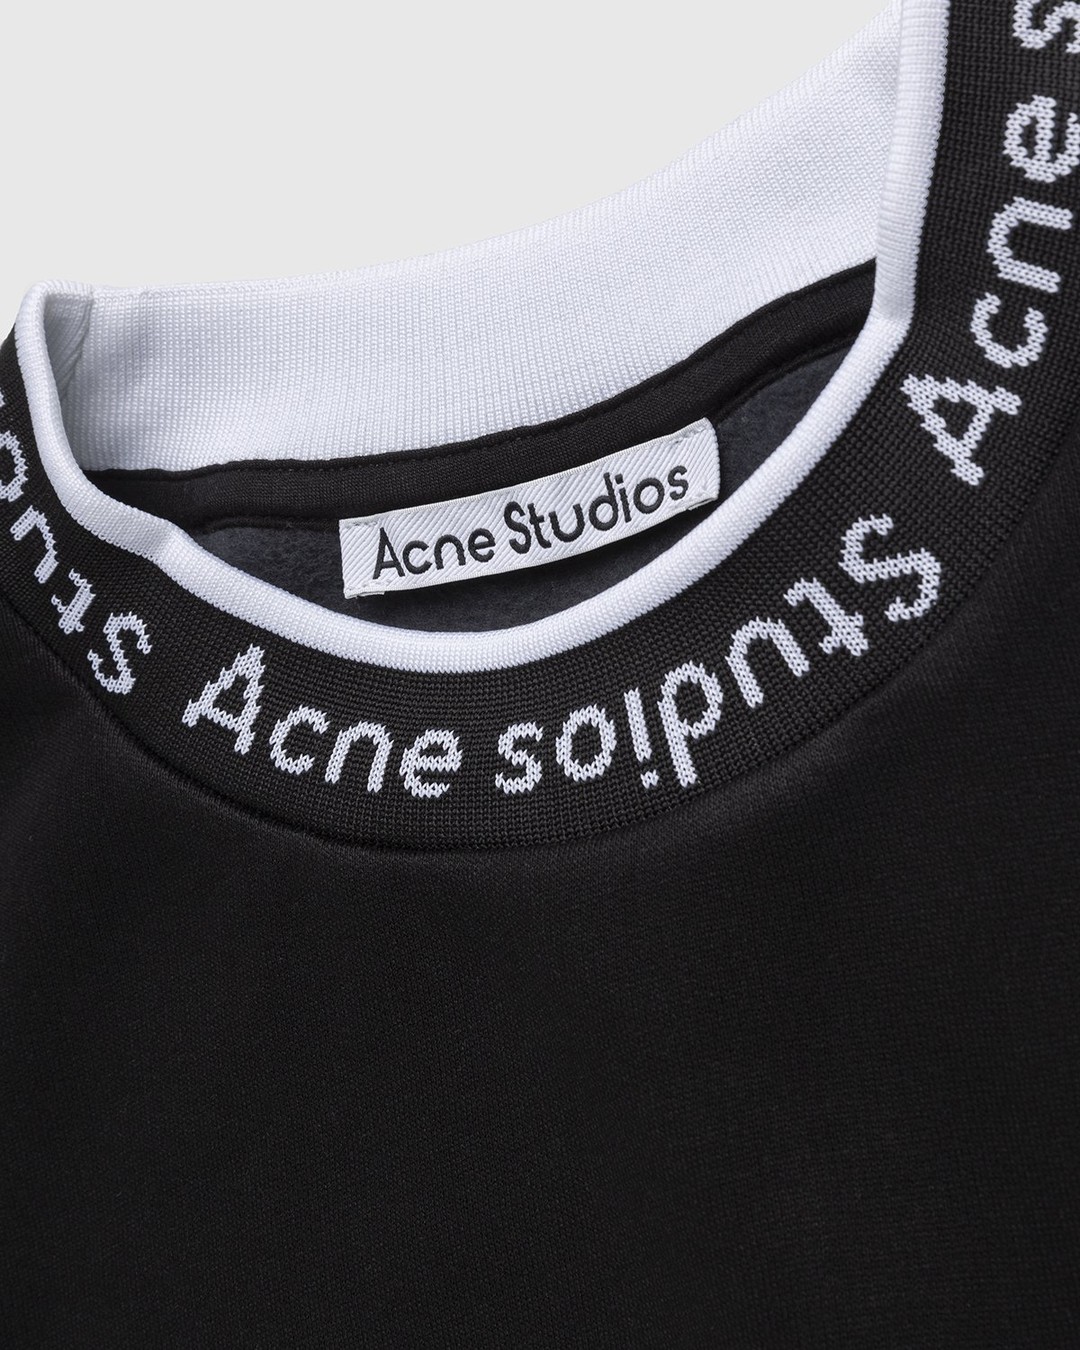 Acne Studios – Logo Rib Sweatshirt Black - Sweats - Black - Image 4